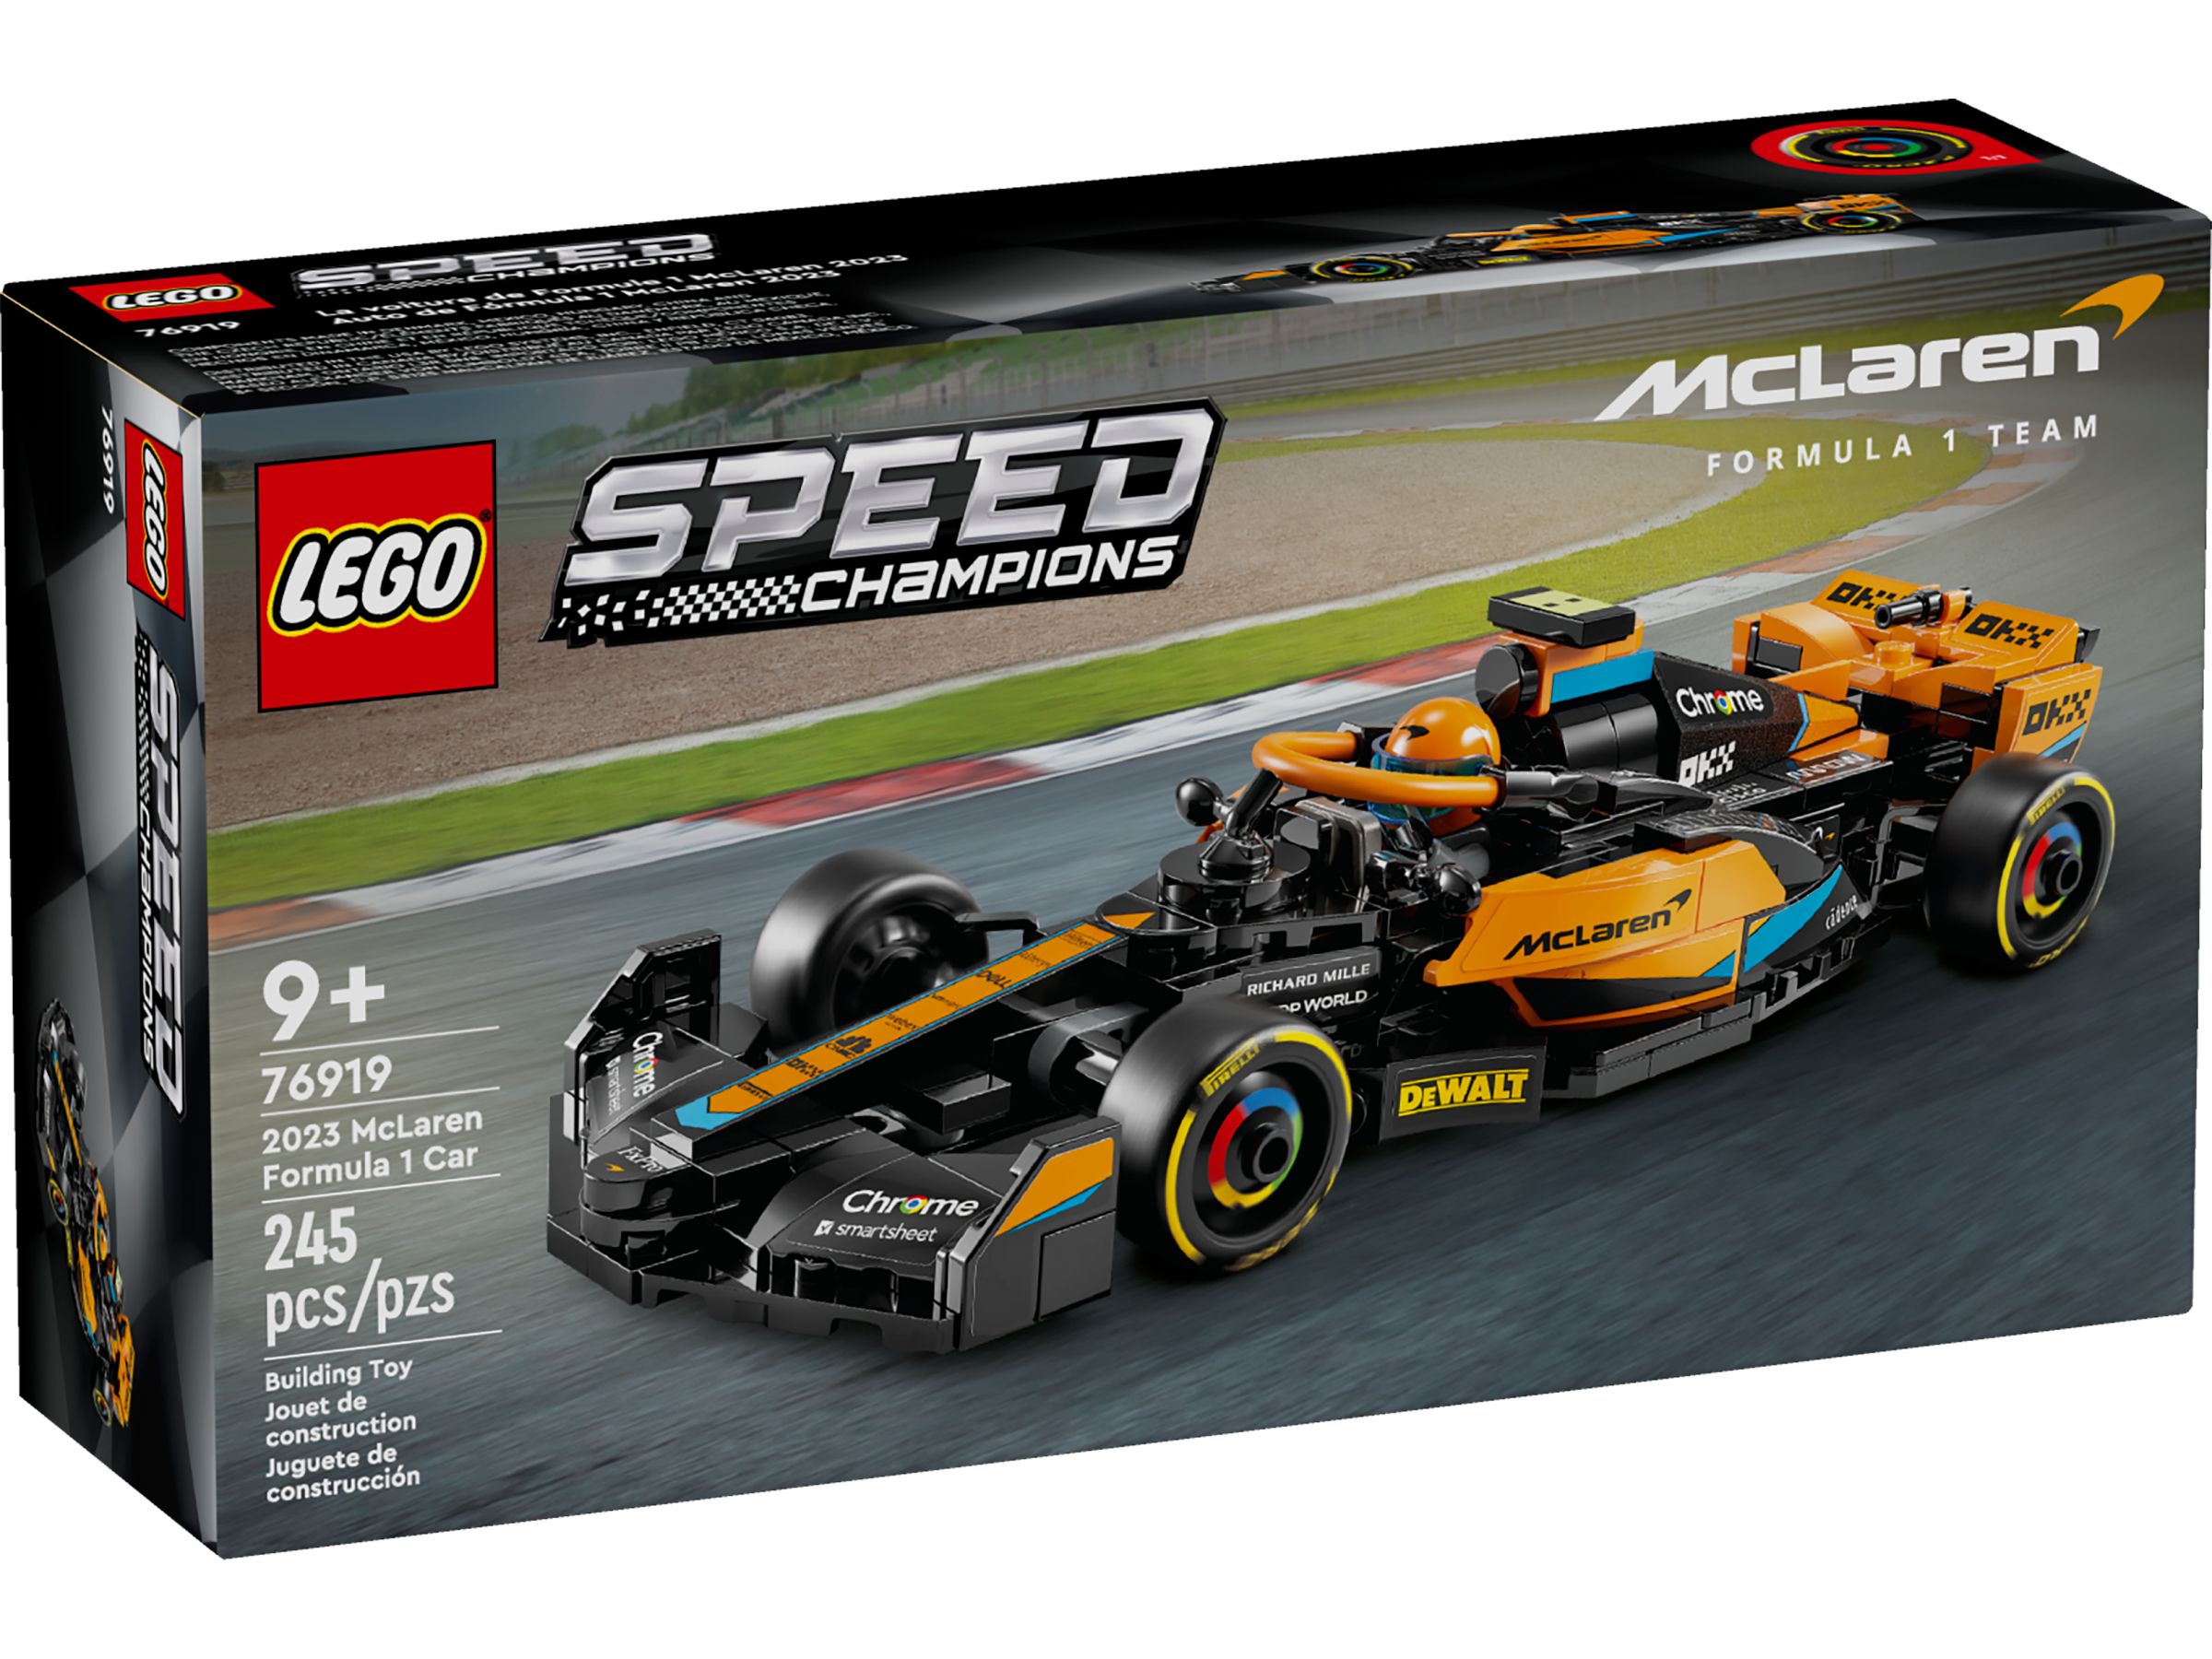 LEGO Speed Champions 76919 McLaren Formel-1 Rennwagen 2023 LEGO_76919_Box1_v39.jpg